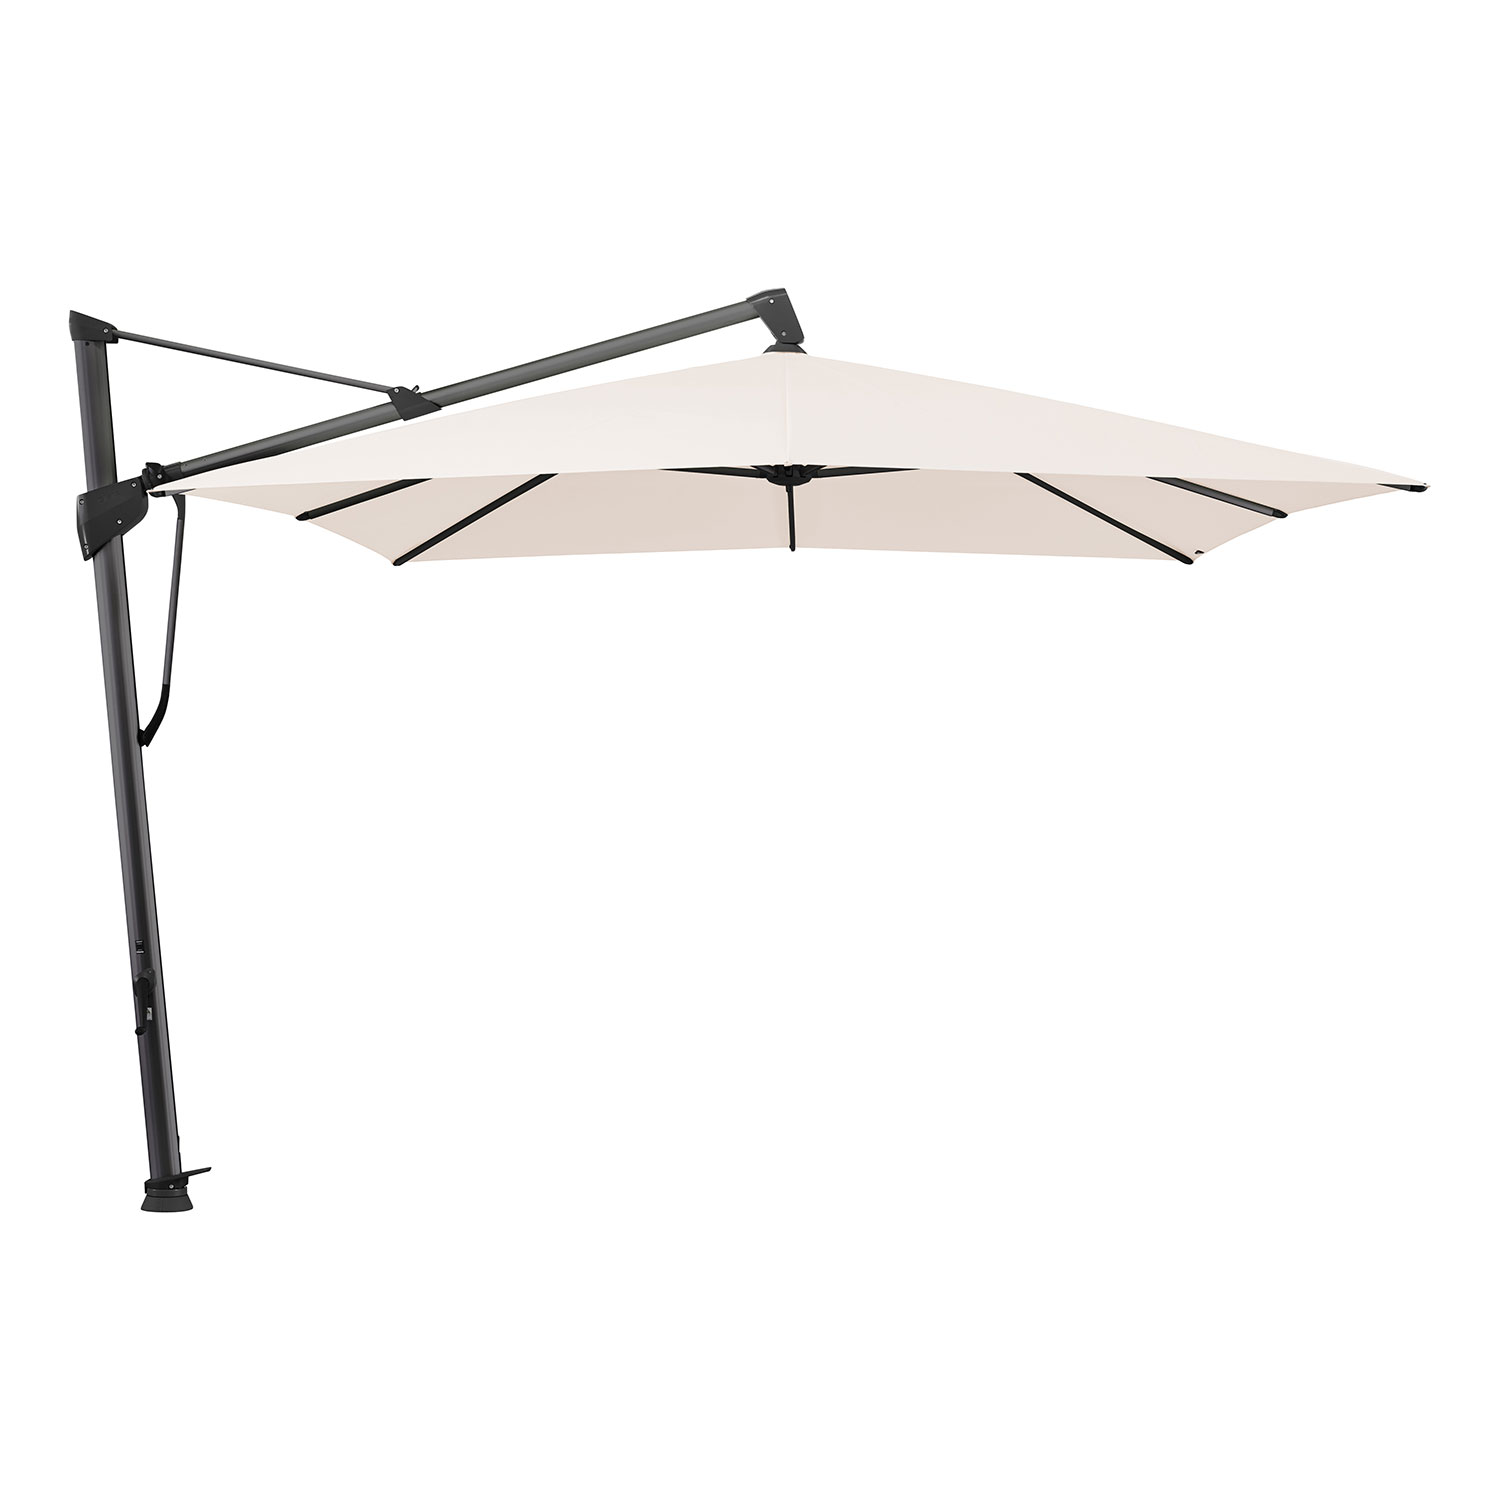 Glatz Sombrano S+ frihängande parasoll 400×300 cm kat.4 antracite alu / 453 vanilla